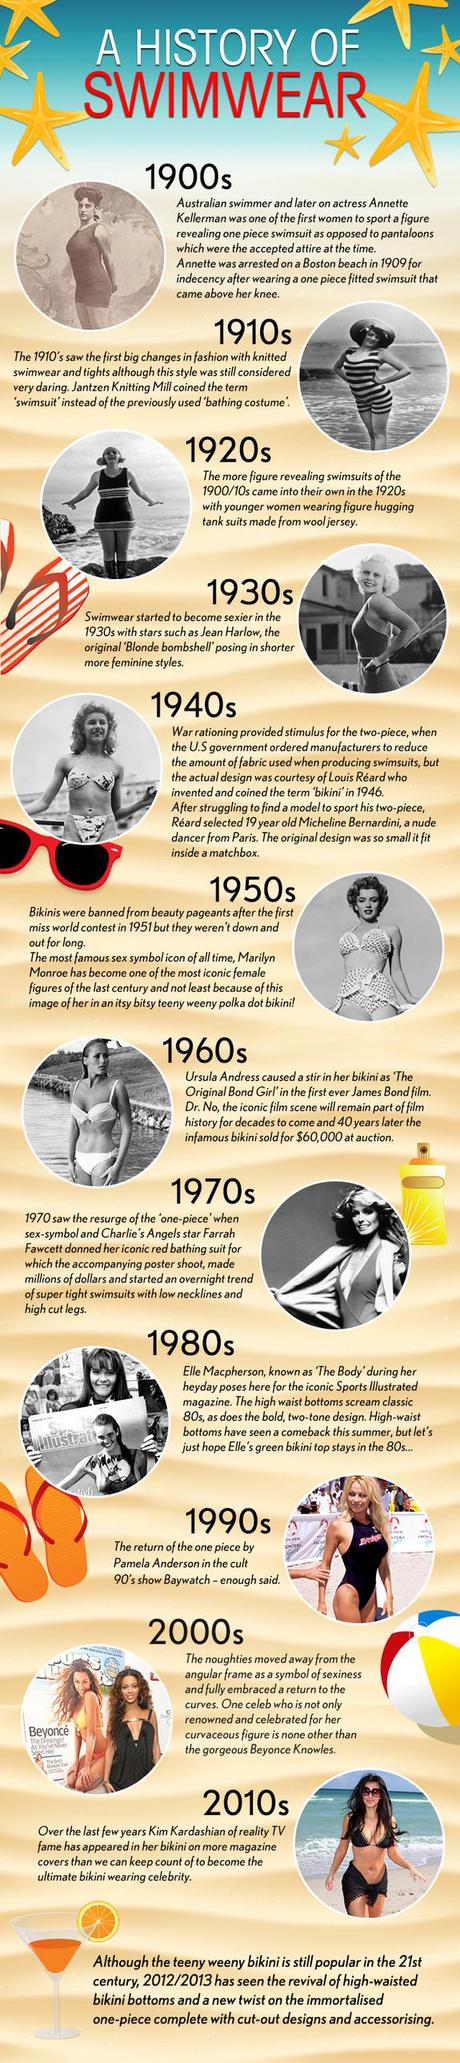 A History of Swimwear